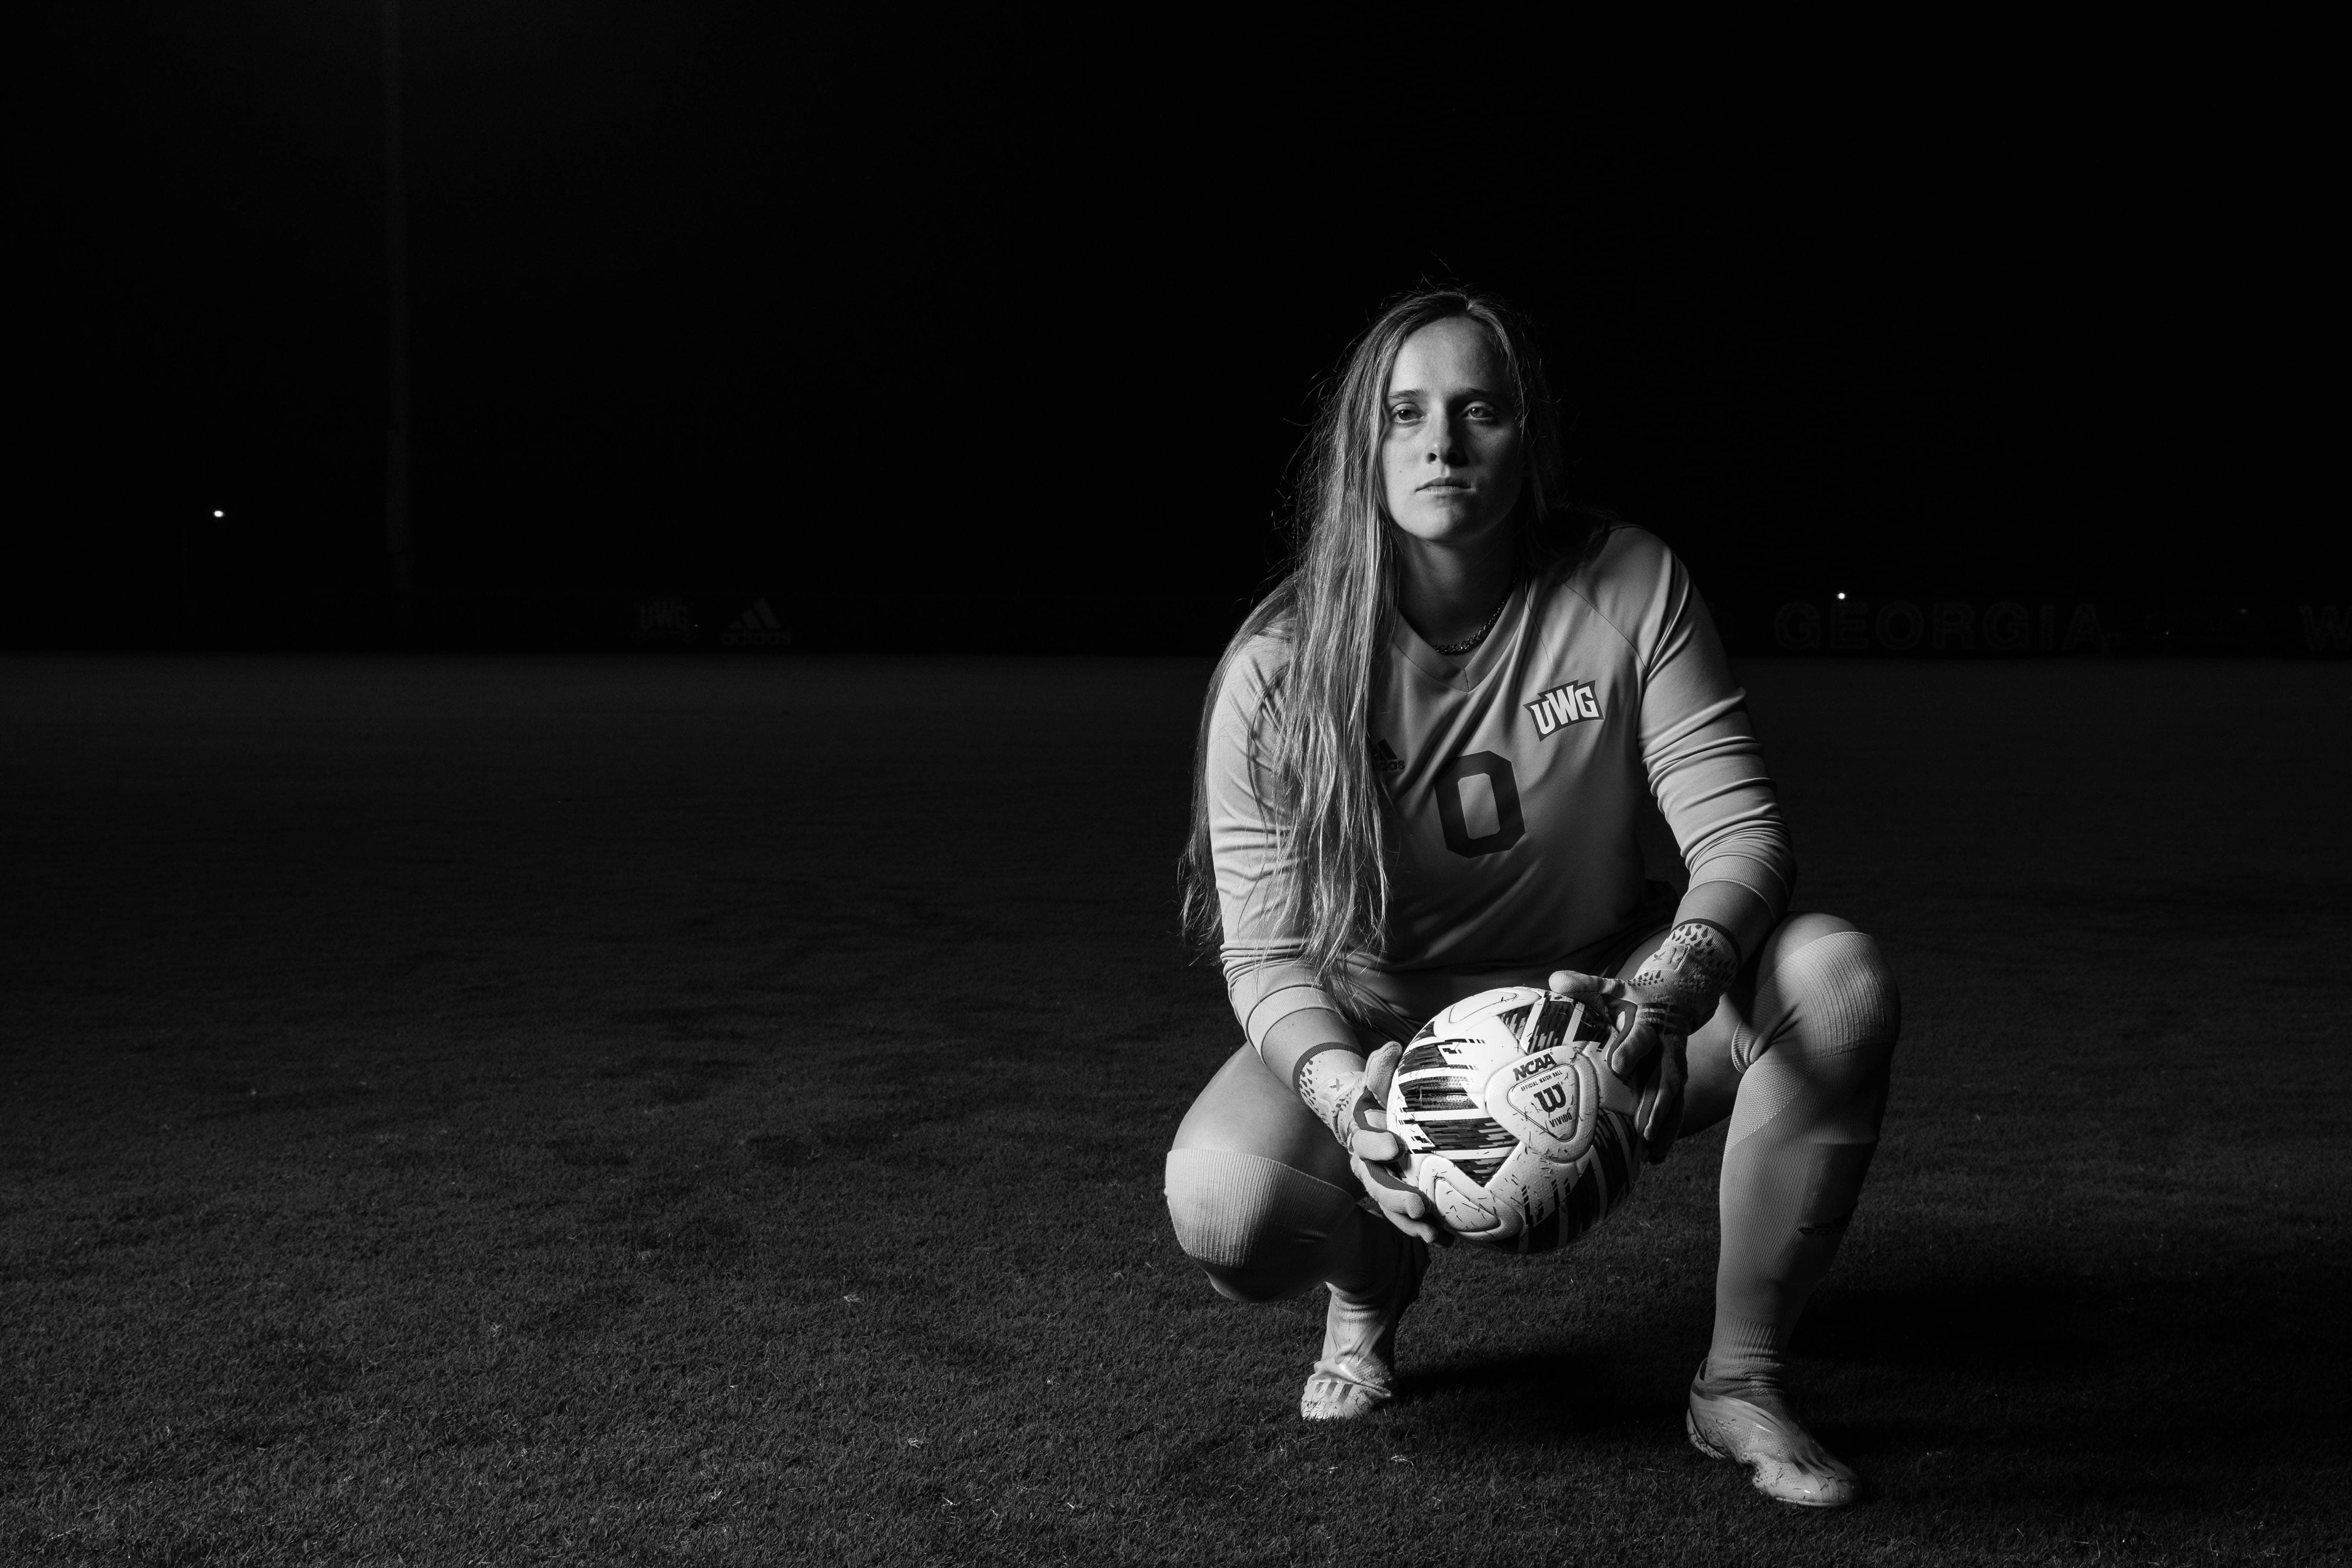 UWG Women's Soccer player kneeling on the field holding a soccer ball. 